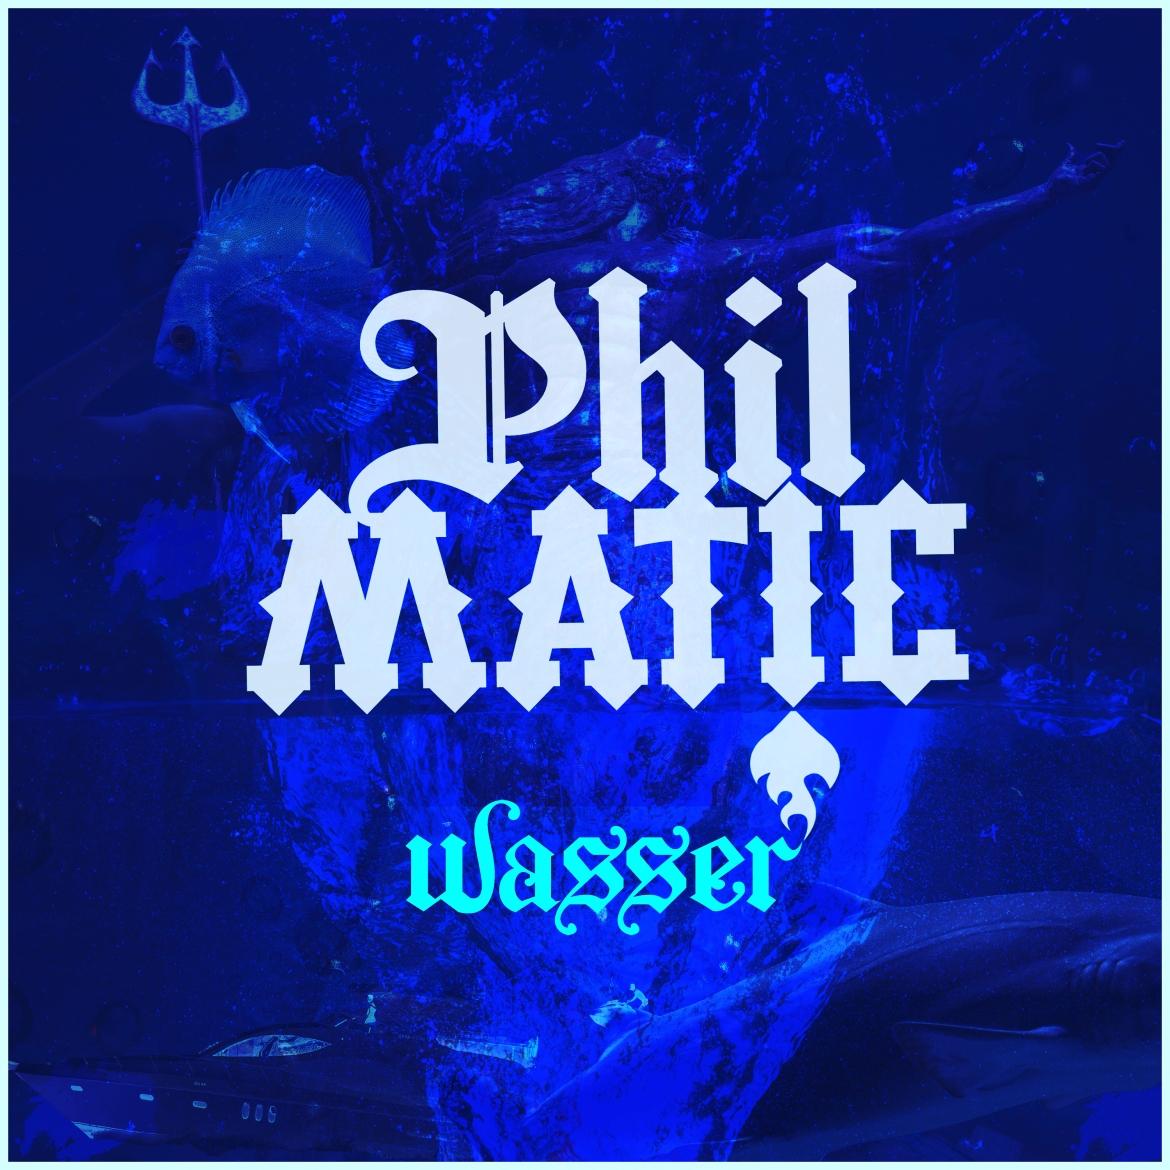 Phil Matic - Wasser